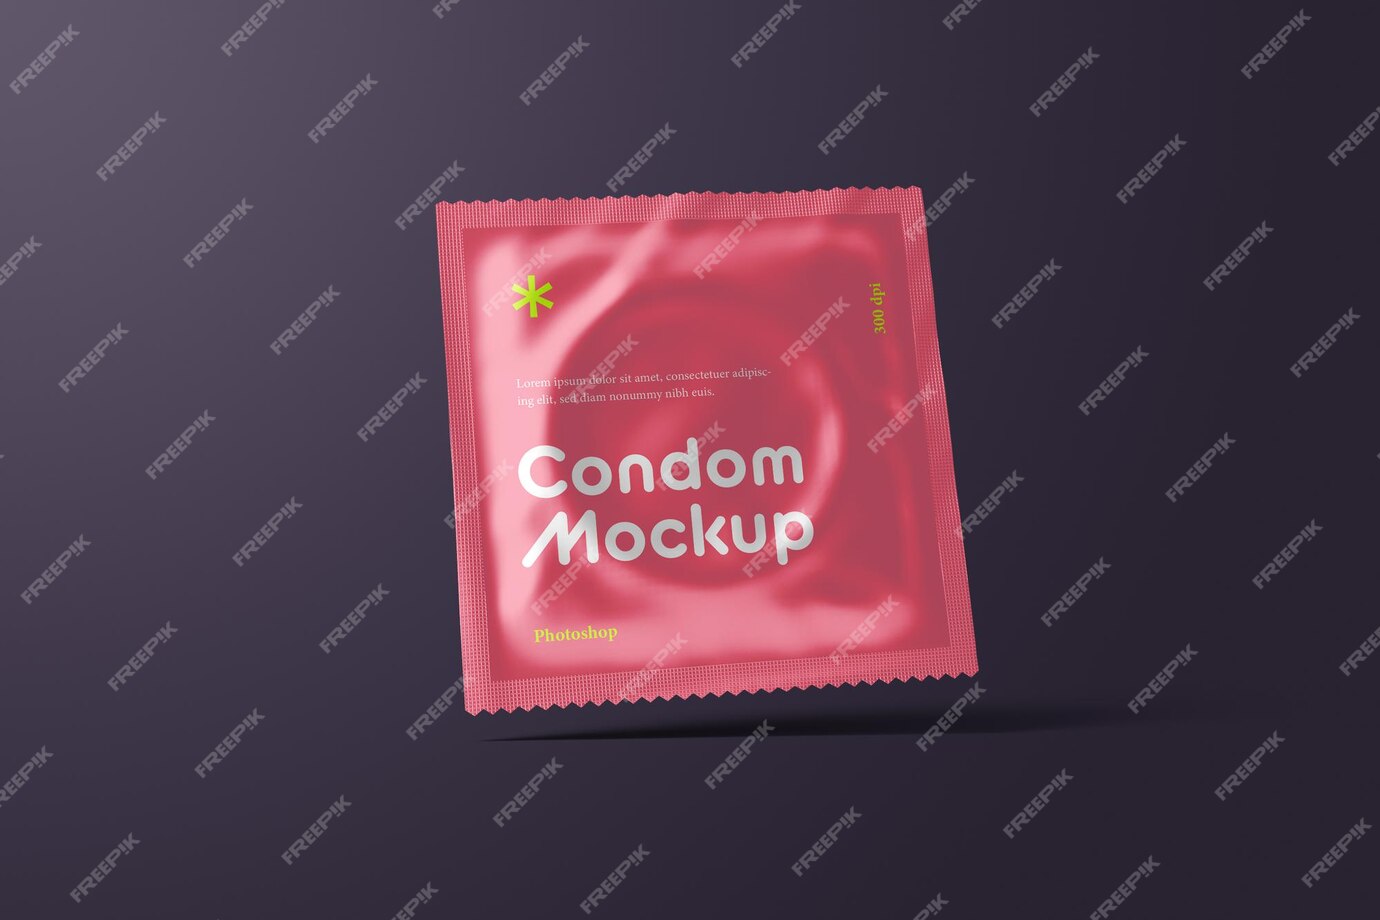 jeden kondom